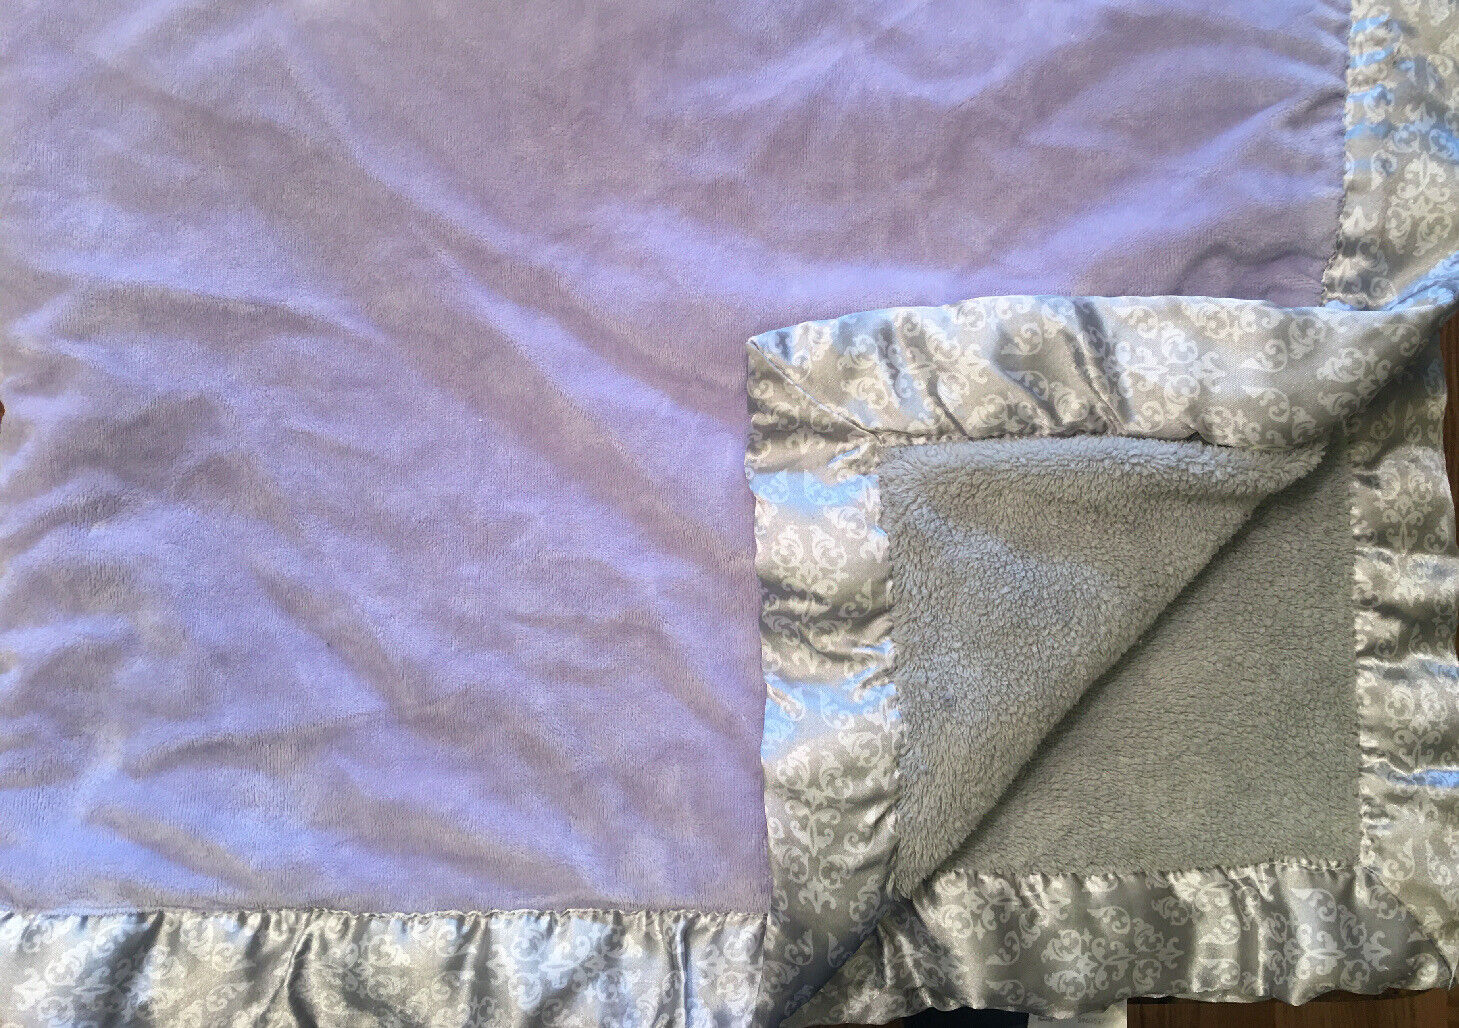 Girls Lavender Popular products Purple Baby Blanket Design Topics on TV Satin Gray White Trim